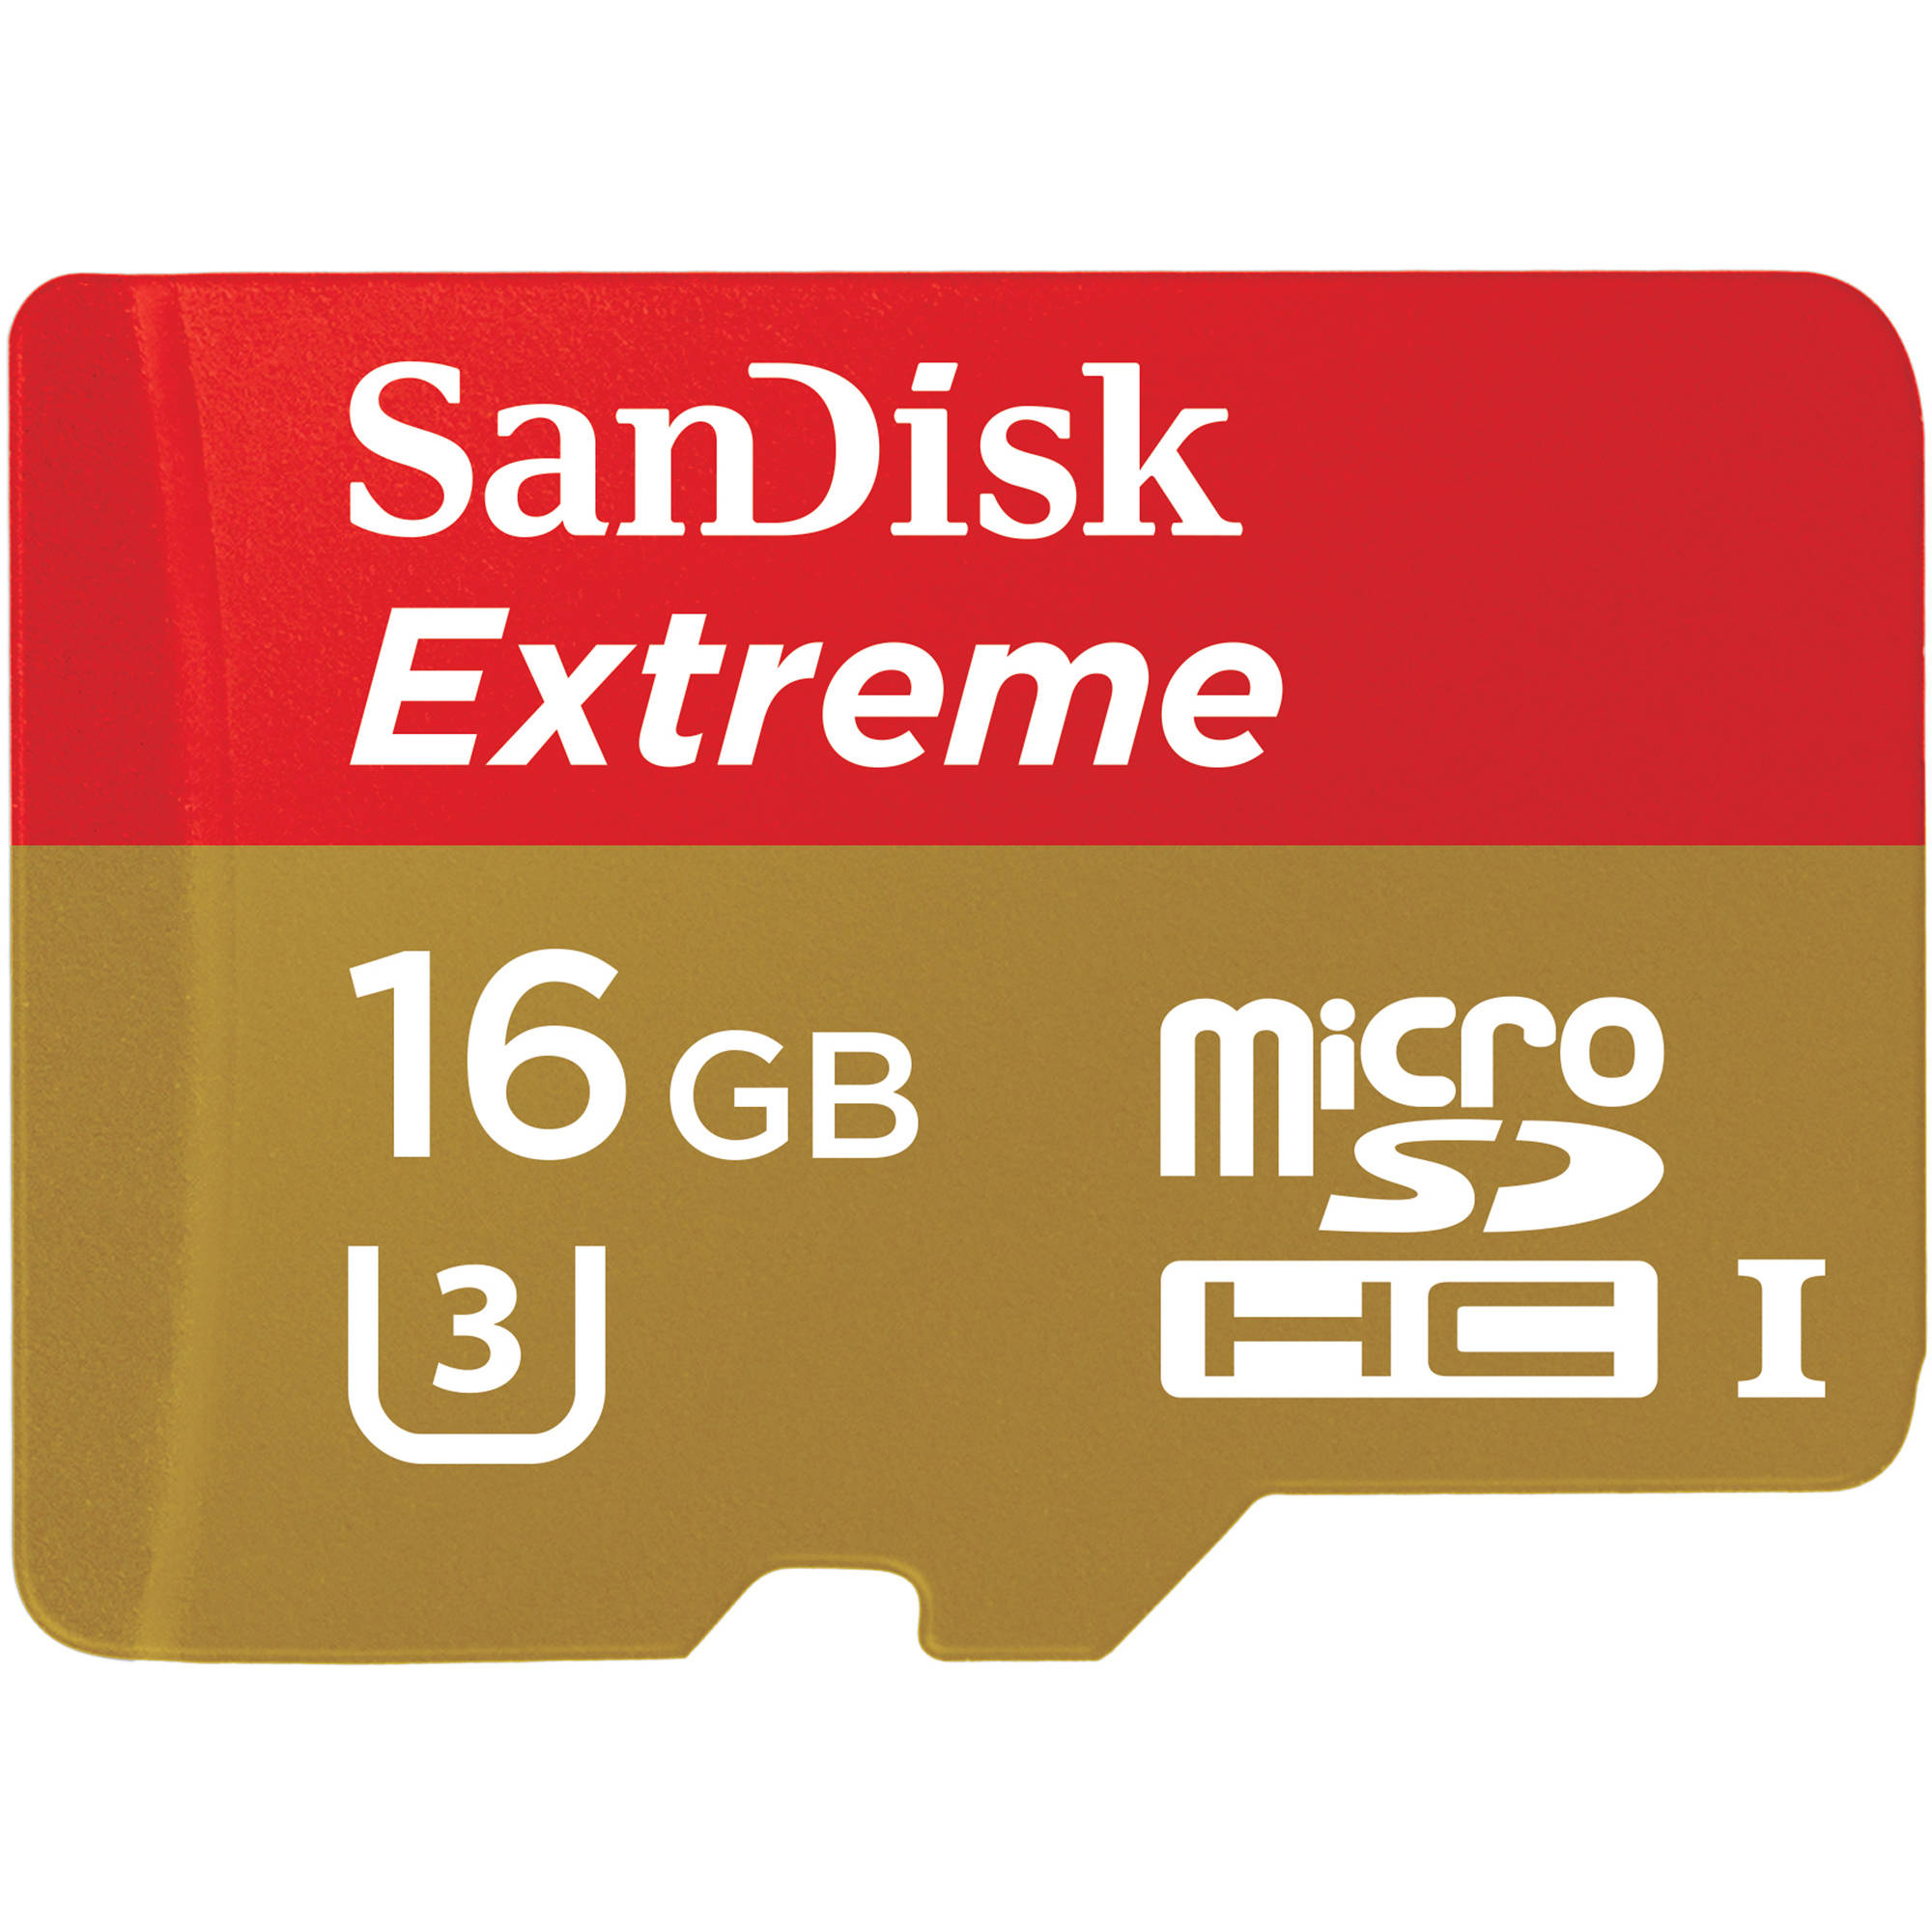 SanDisk 16GB Extreme UHS-I microSDHC Memory Card (U3/Class 10)